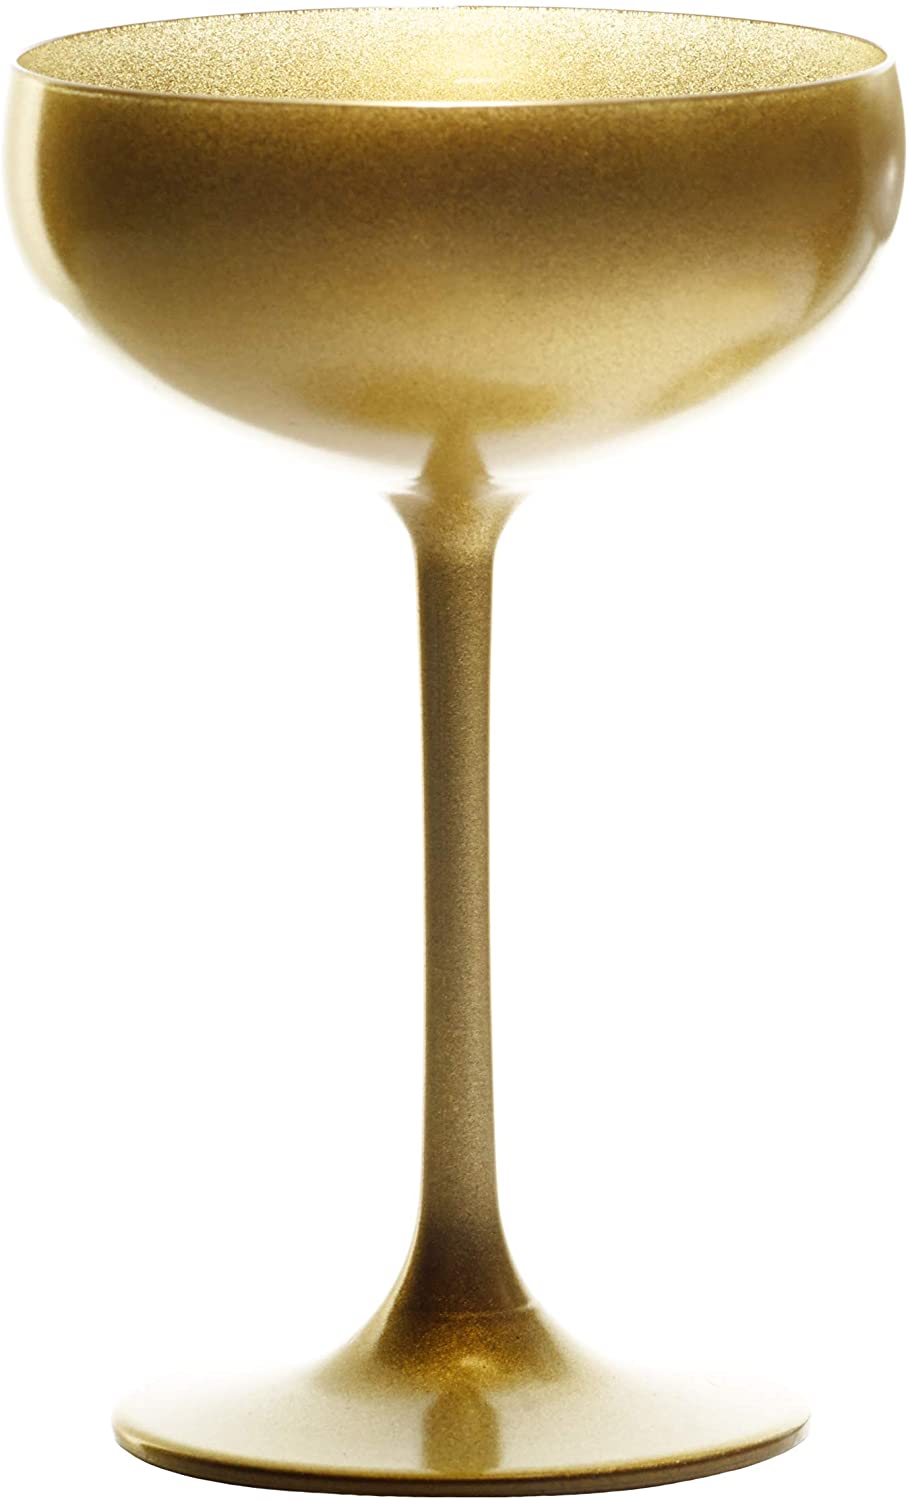 STÖLZLE LAUSITZ Elements Champagne Bowls Gold Set of 6 I Cocktail Bowls Made of High-Quality Crystal Glass 230 ml I Champagne Glasses Set Dishwasher Safe and Shatter-resistant I Coupe Glasses